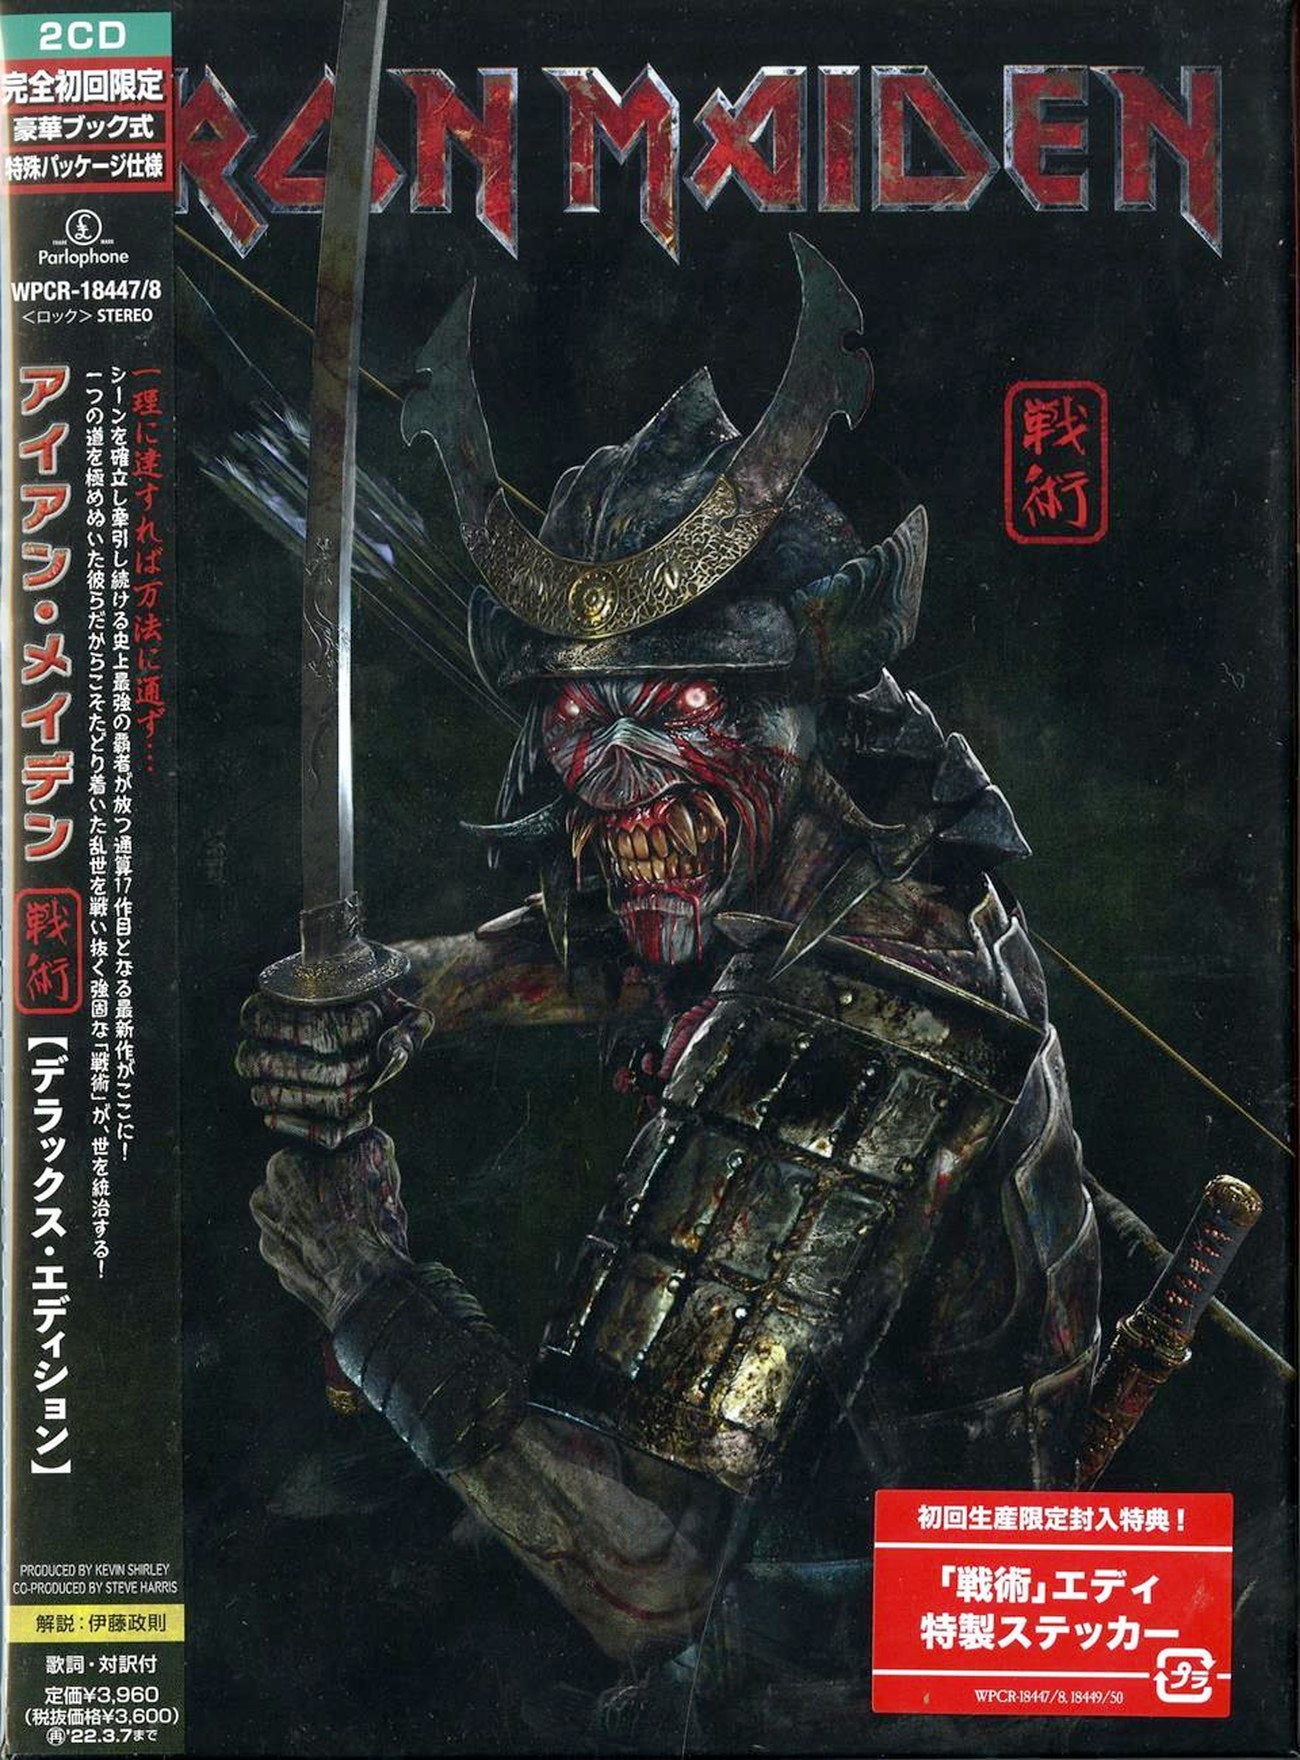 Iron Maiden - Senjutsu Deluxe Edition - Japan  CD  Limited Edition